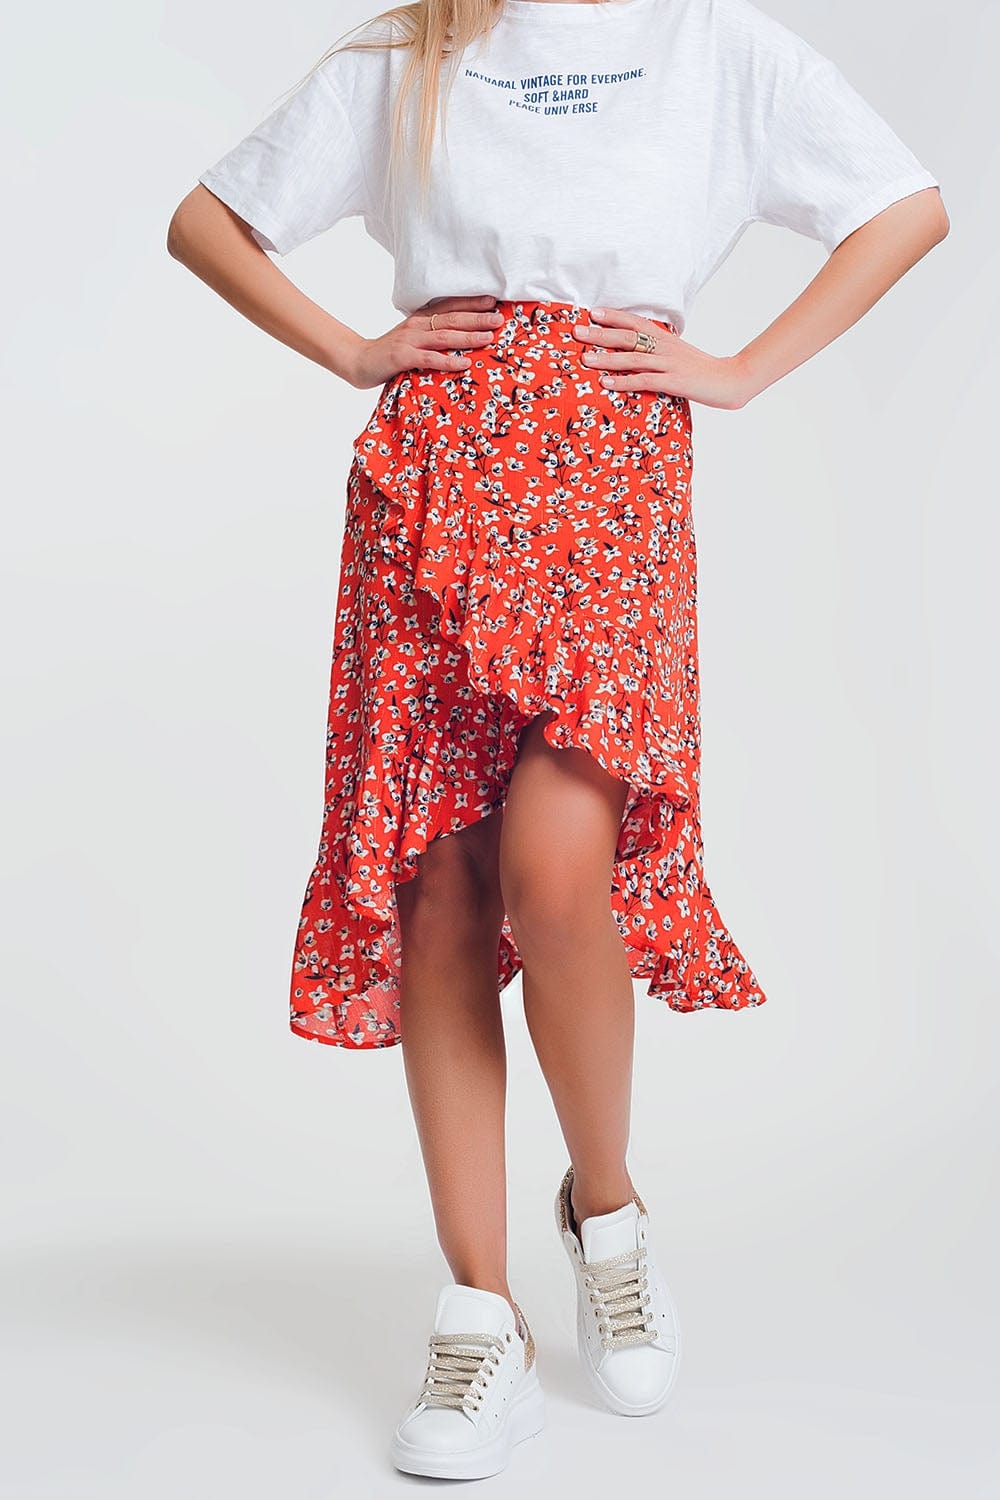 Q2 Women's Skirt Asymetric wrap printed red skirt